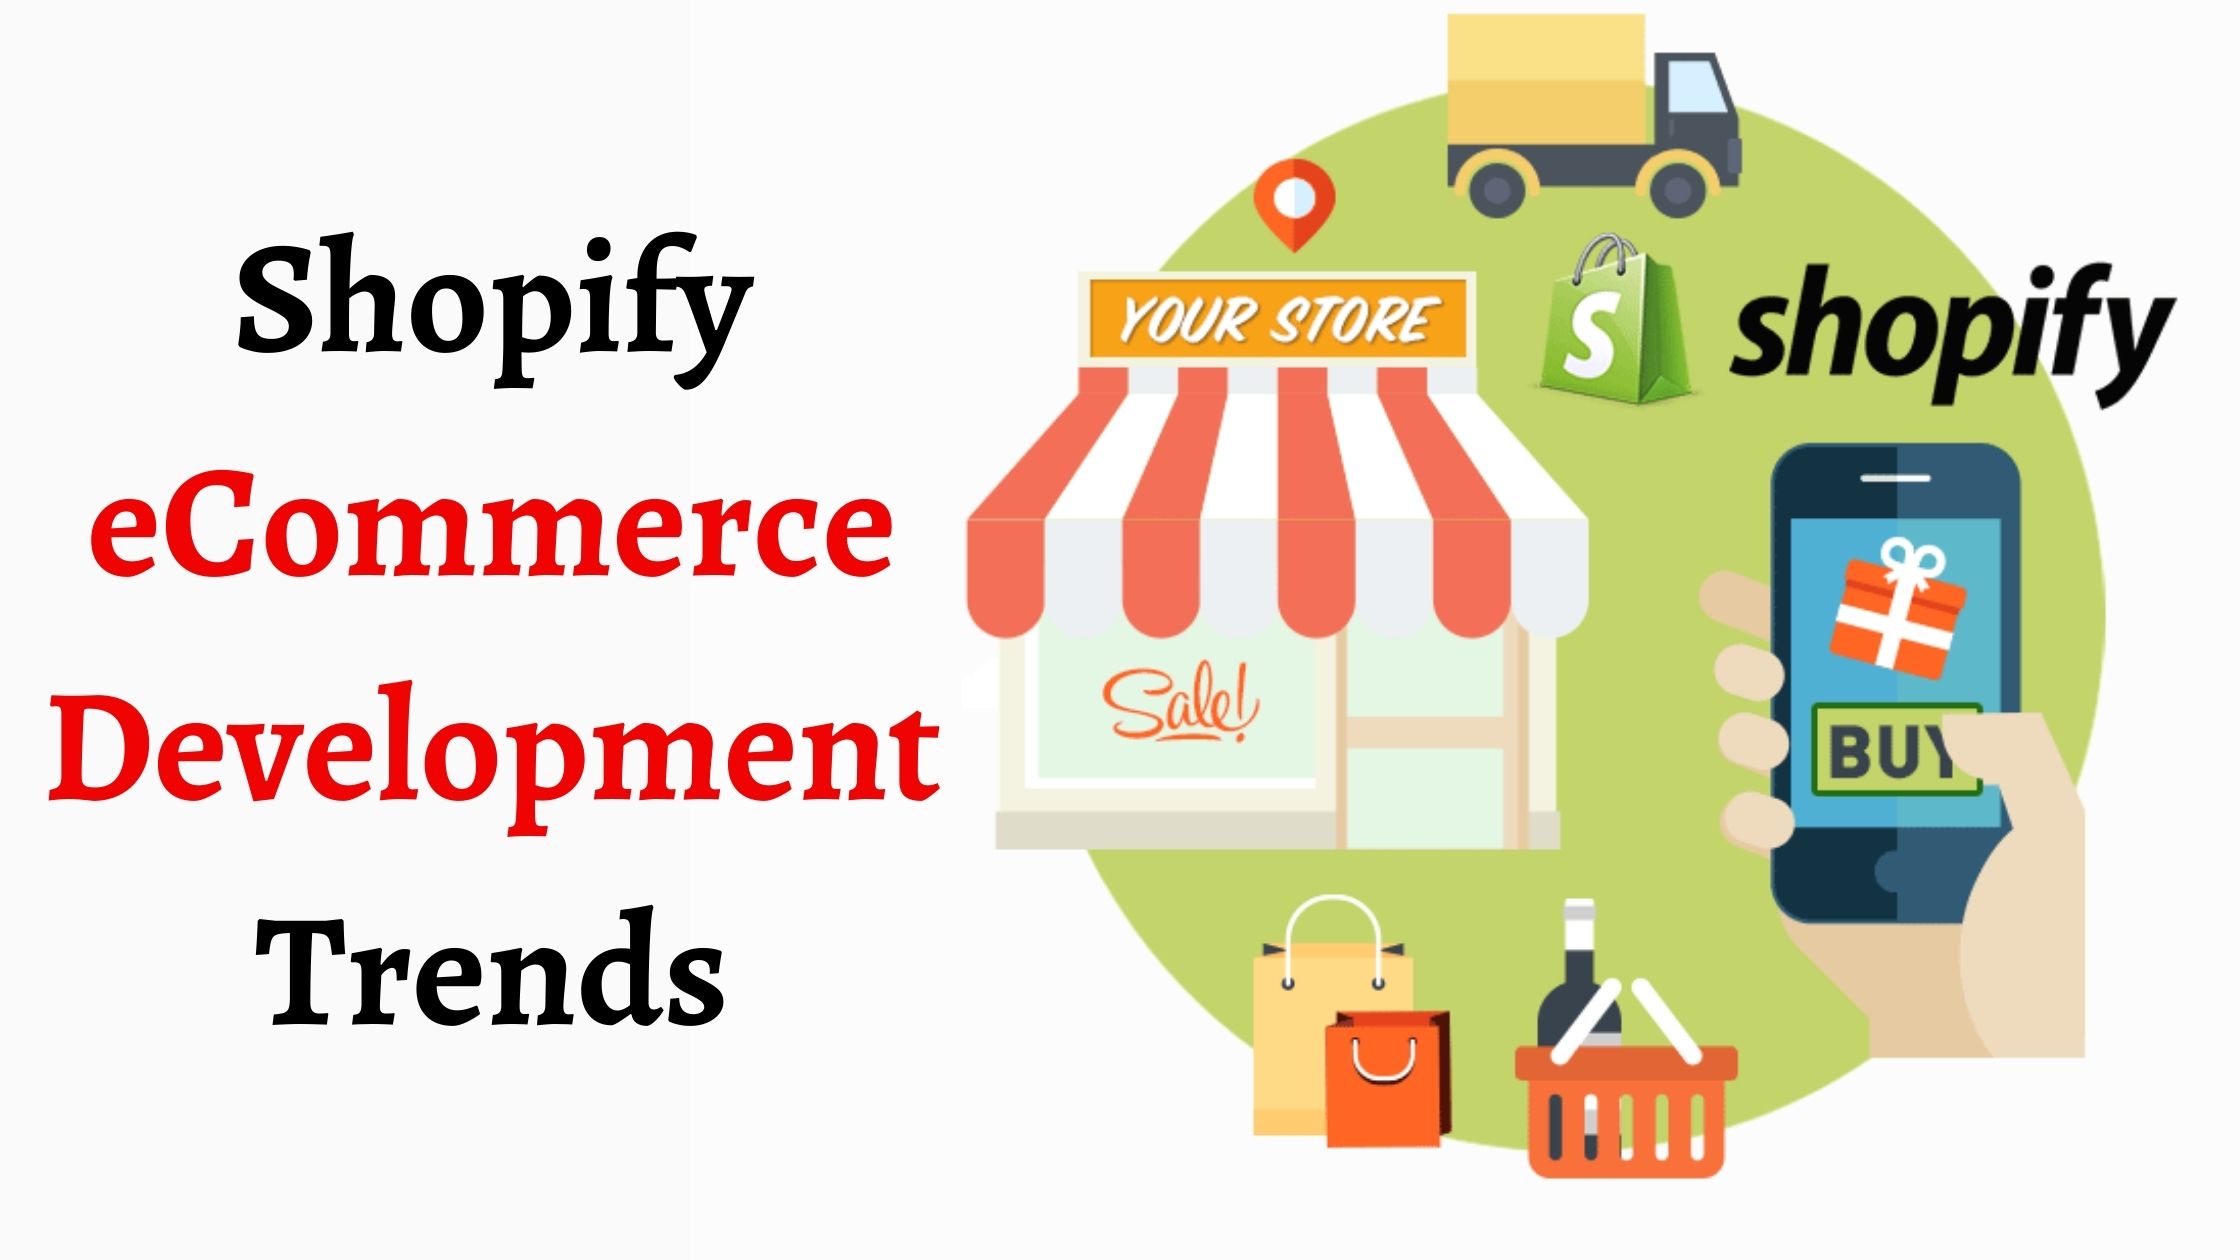 Shopify eCommerce Development Trends